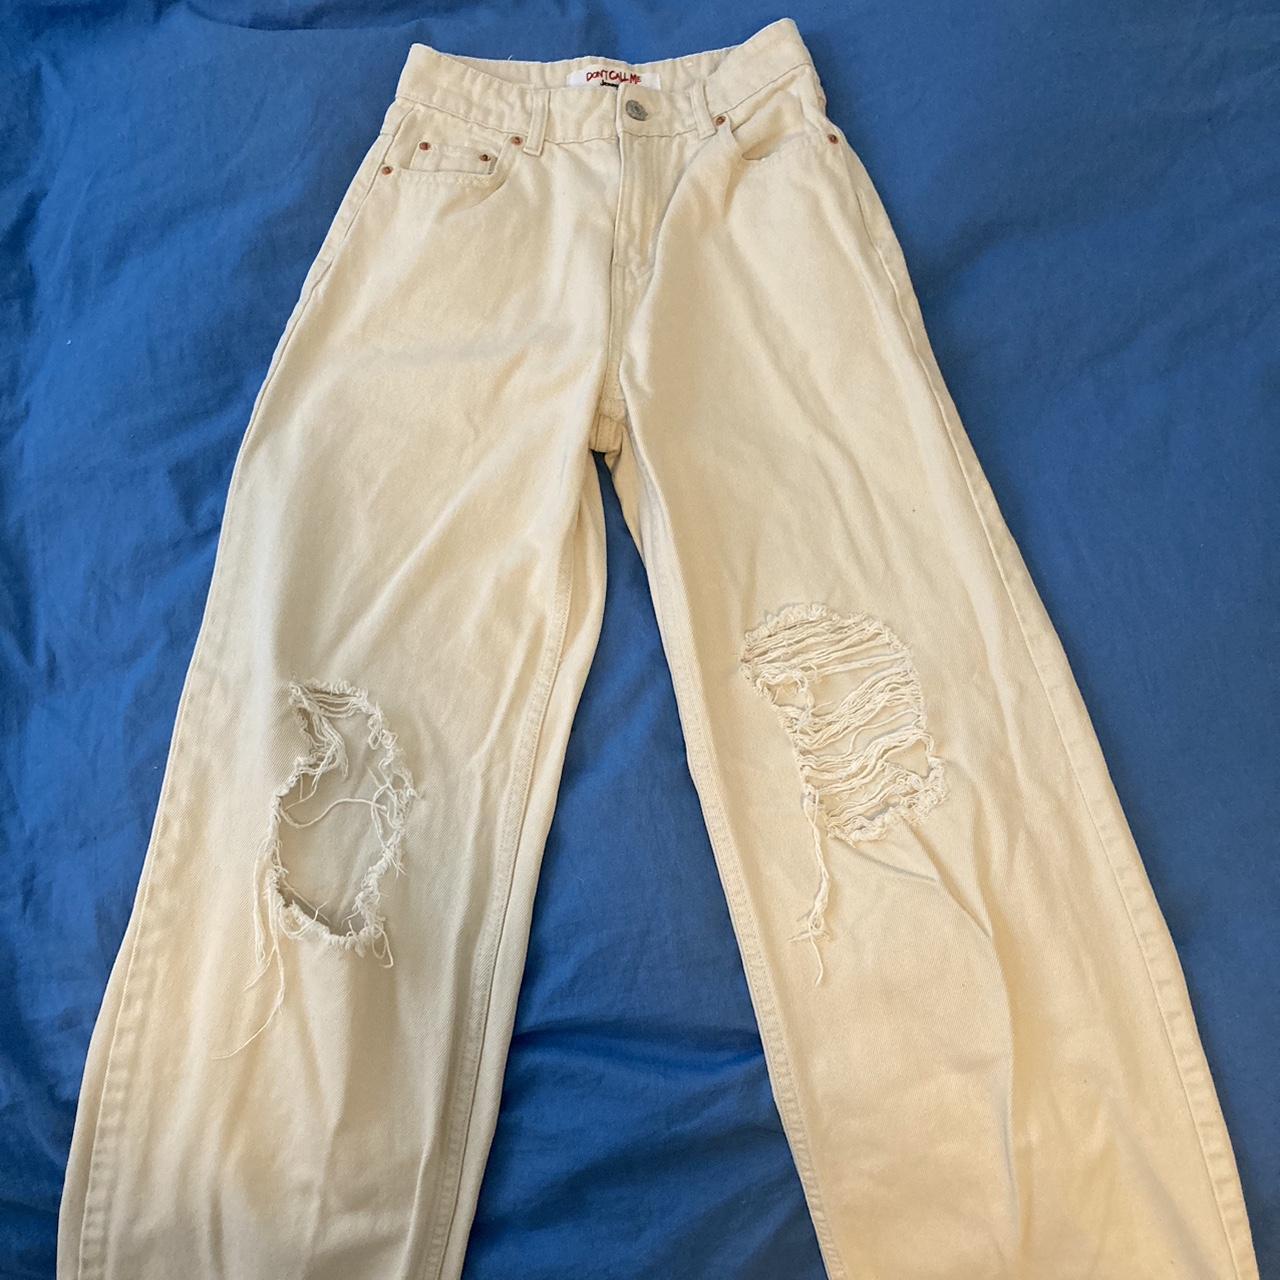 Beige ripped dad jeans size 24 waist bought in... - Depop